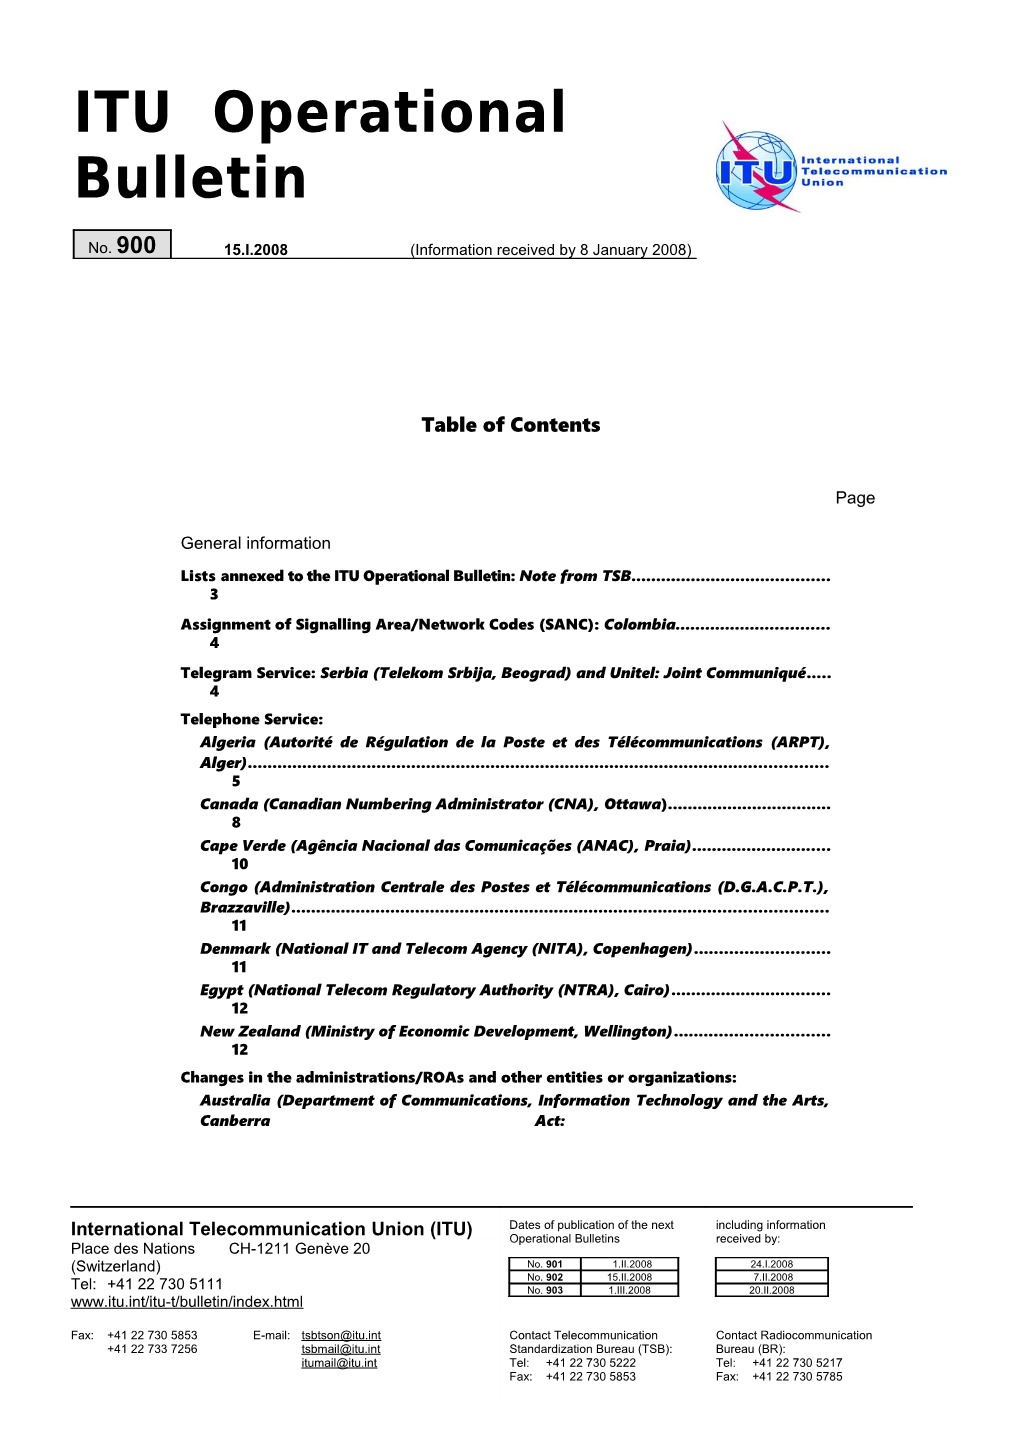 ITU Operational Bulletin No.900 of 15.I.2008